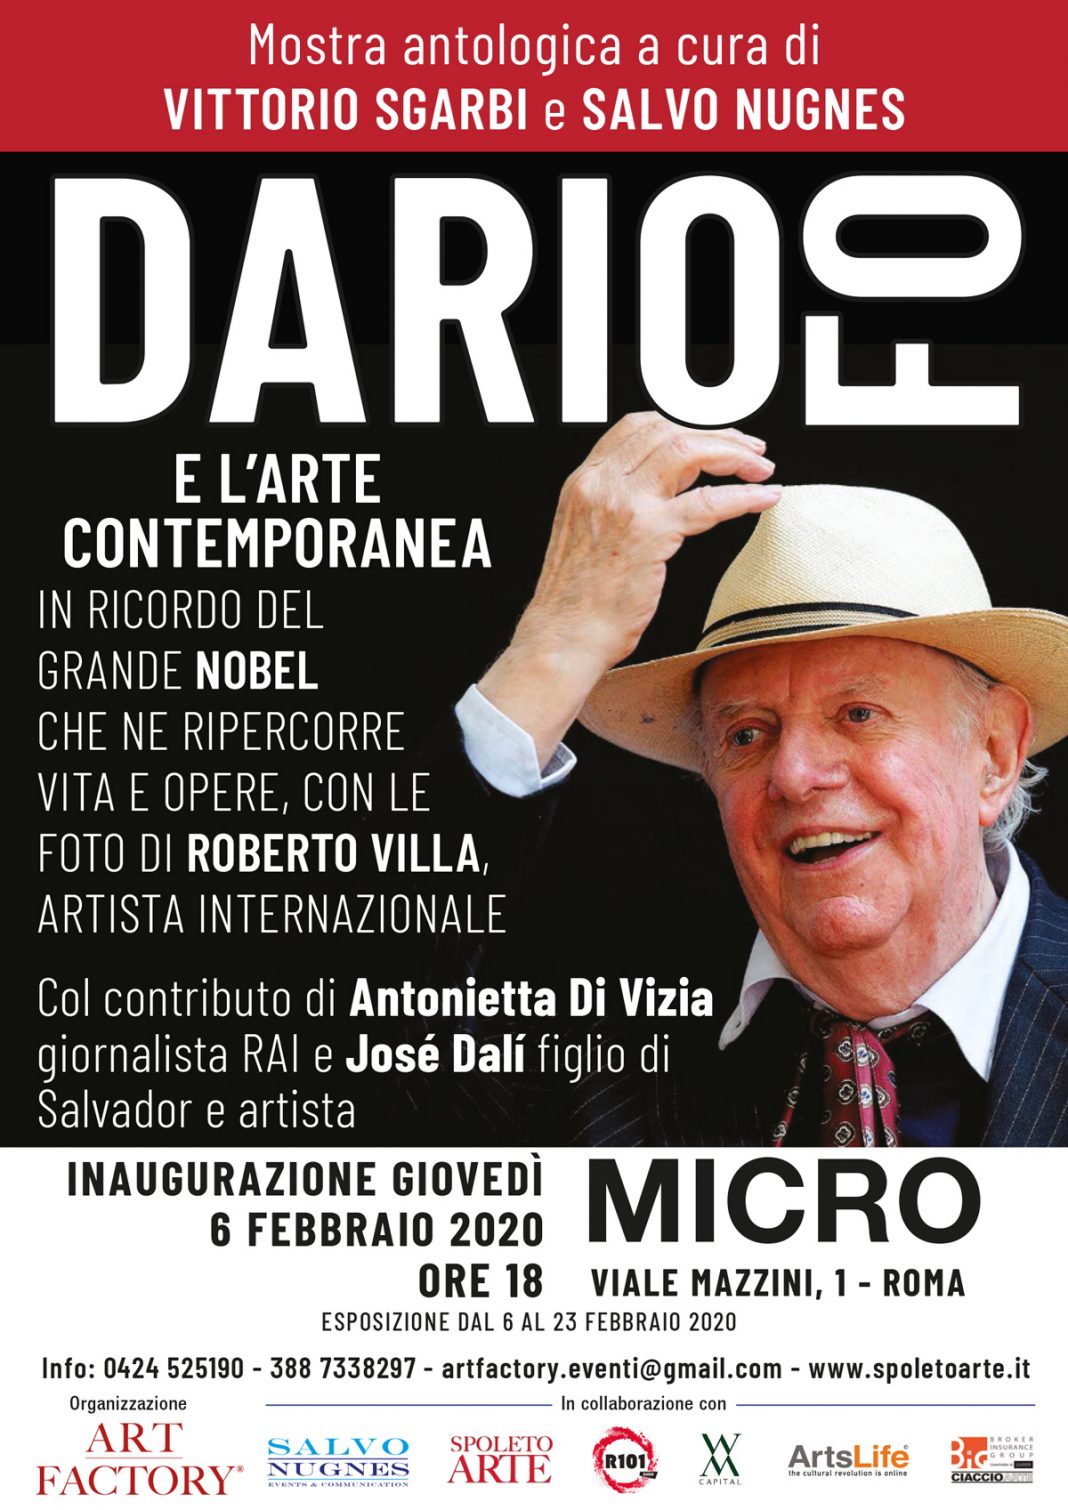 Dario Fo e l’arte contemporaneahttps://www.exibart.com/repository/media/formidable/11/locandina-DARIO-FO-micro-ok-1068x1510.jpg